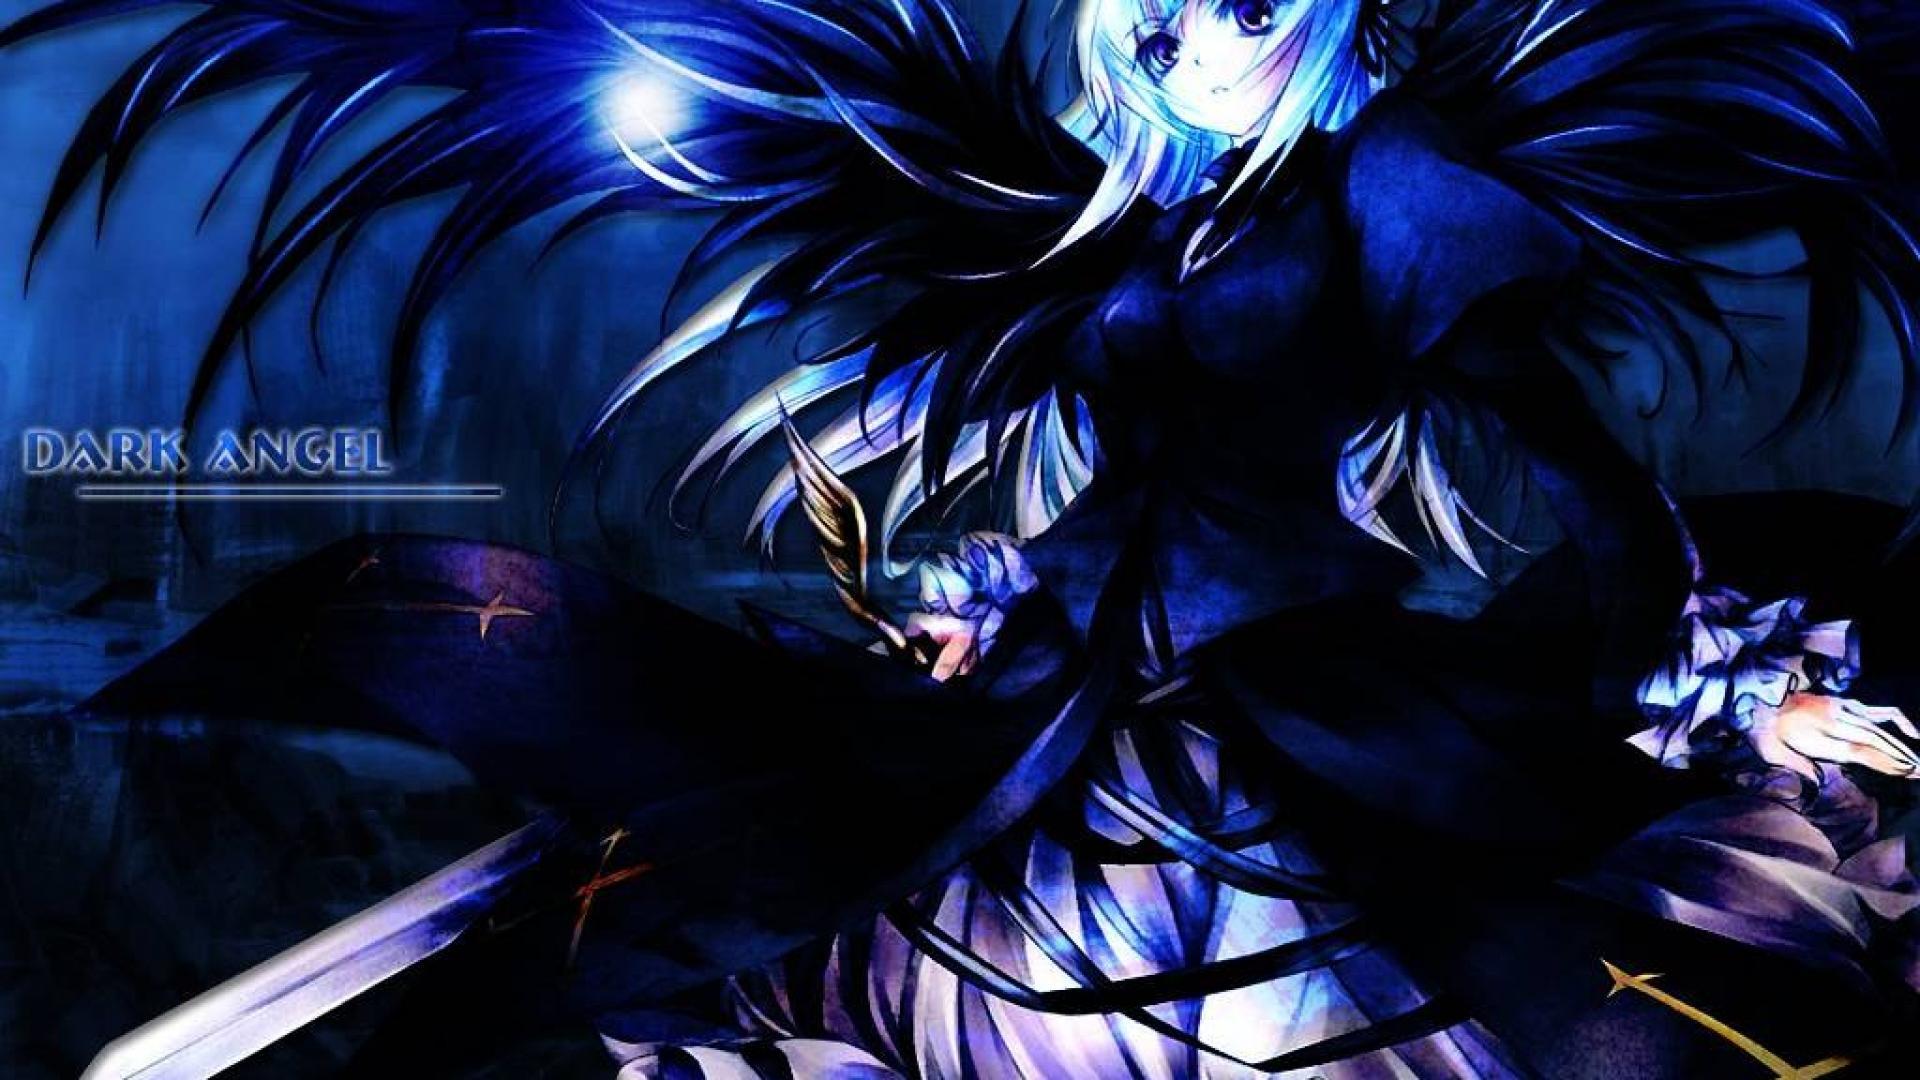 evil inside..⛓ | Anime shadow, Anime monochrome, Anime art dark